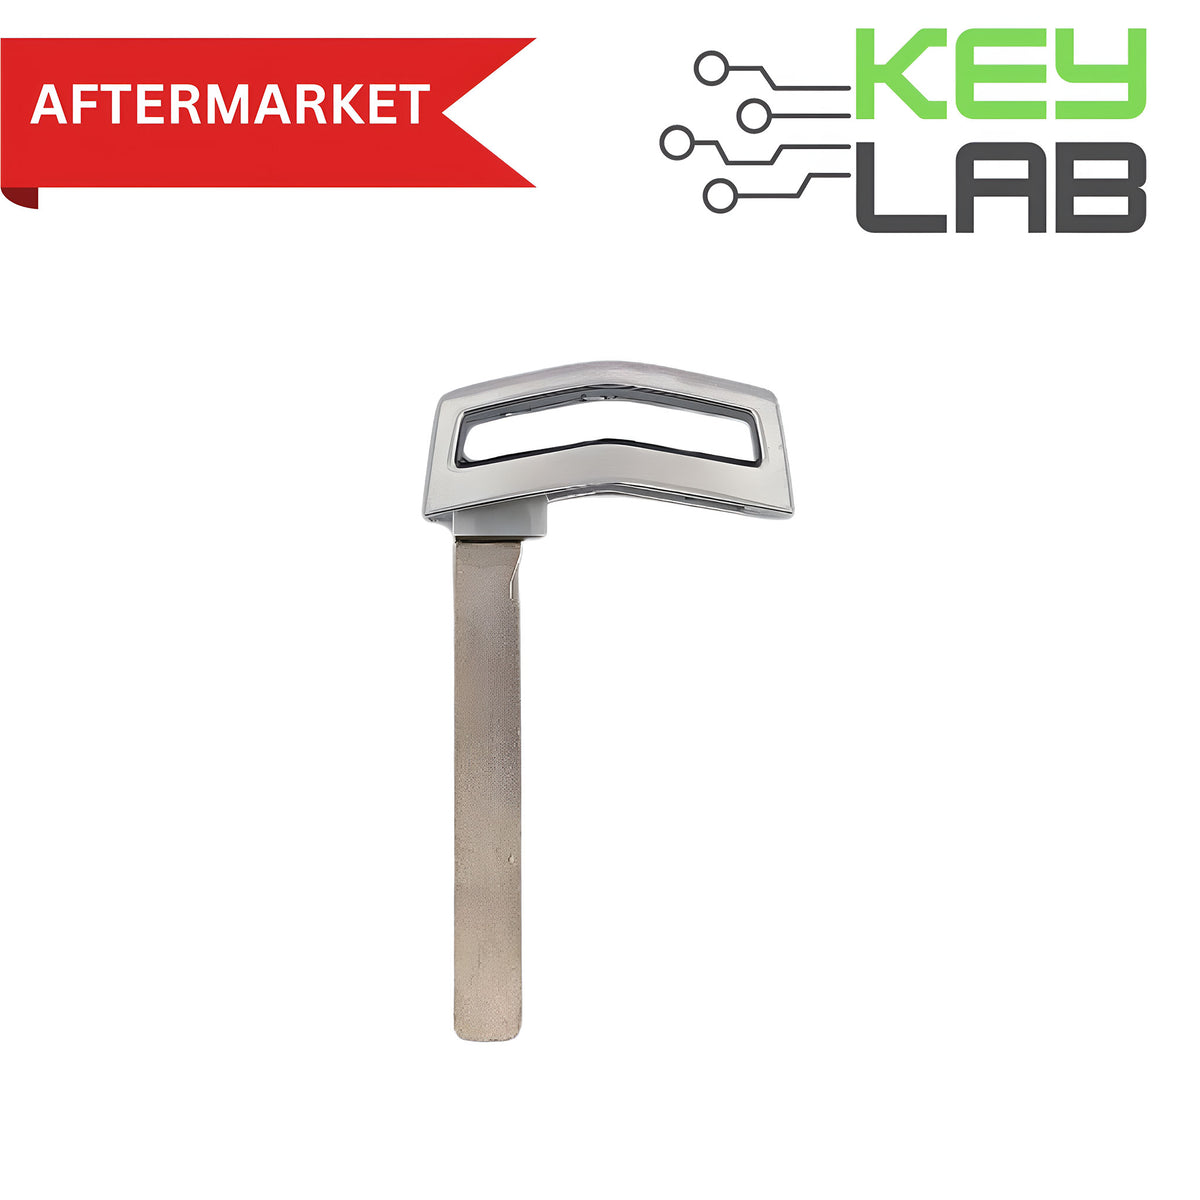 Genesis Aftermarket 2019-2021 G70 Smart Key Insert Blade PN# 81996-B1500 - Royal Key Supply